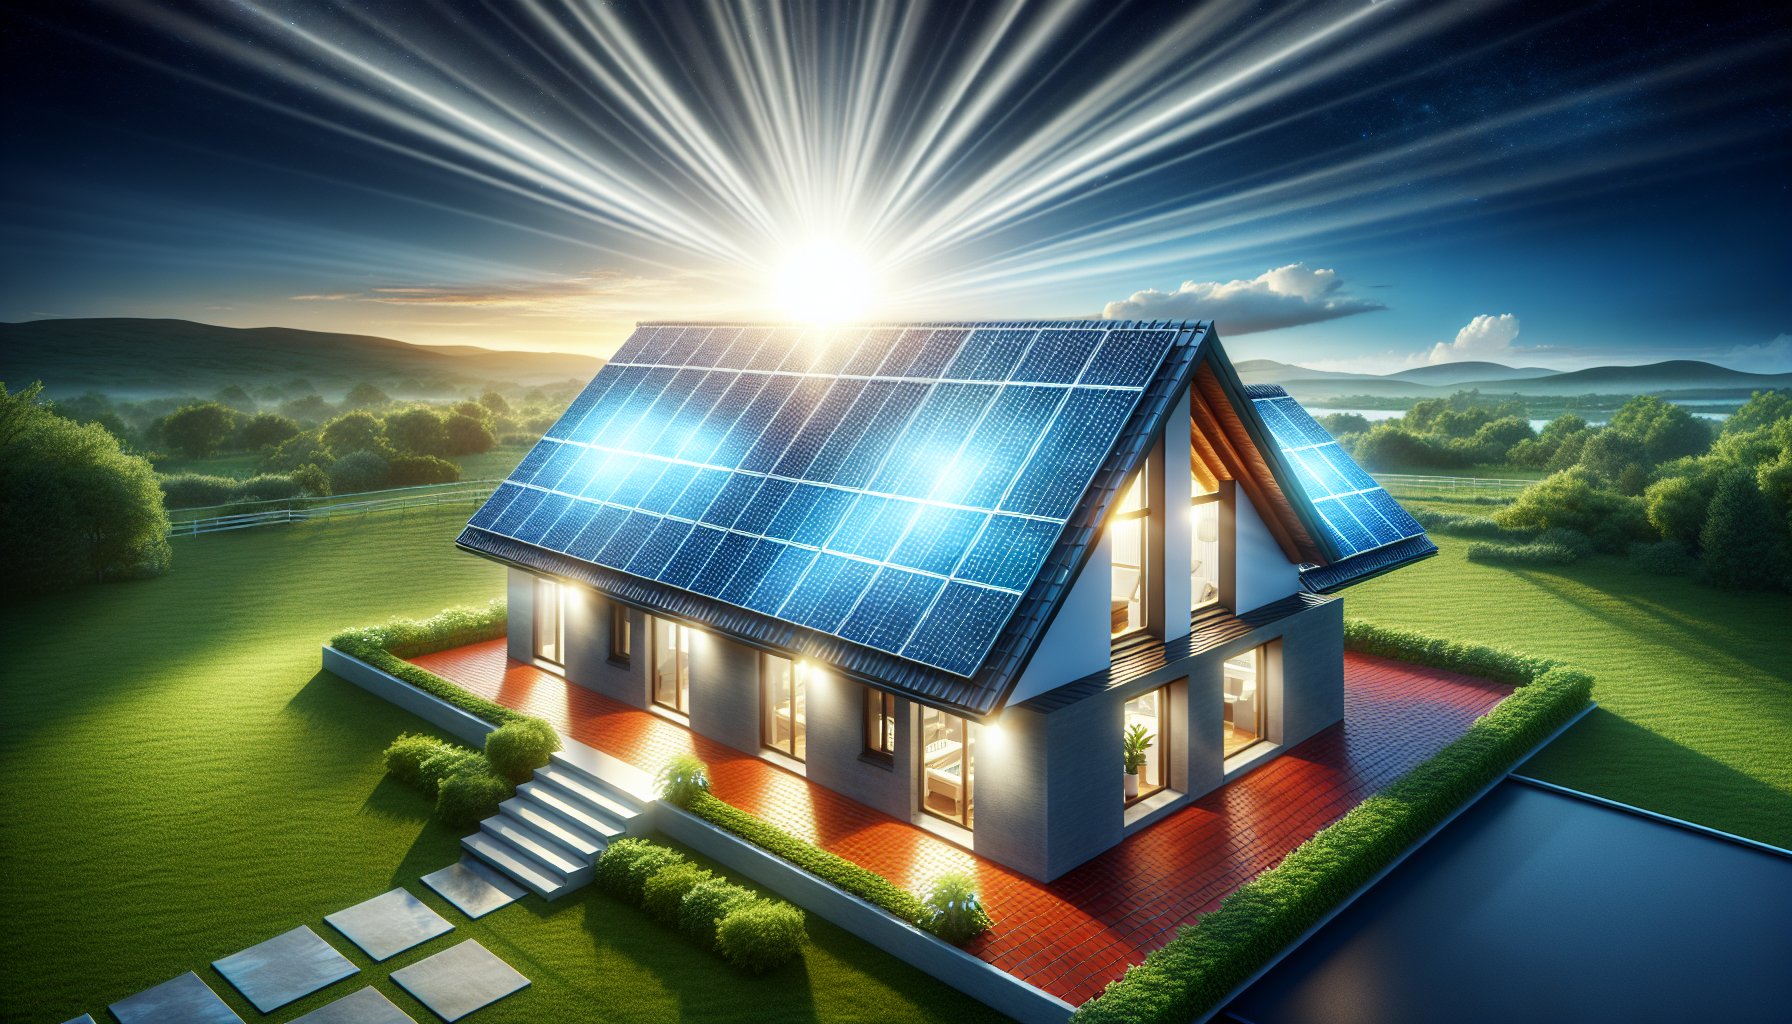 Solar panels harnessing the sun's energy